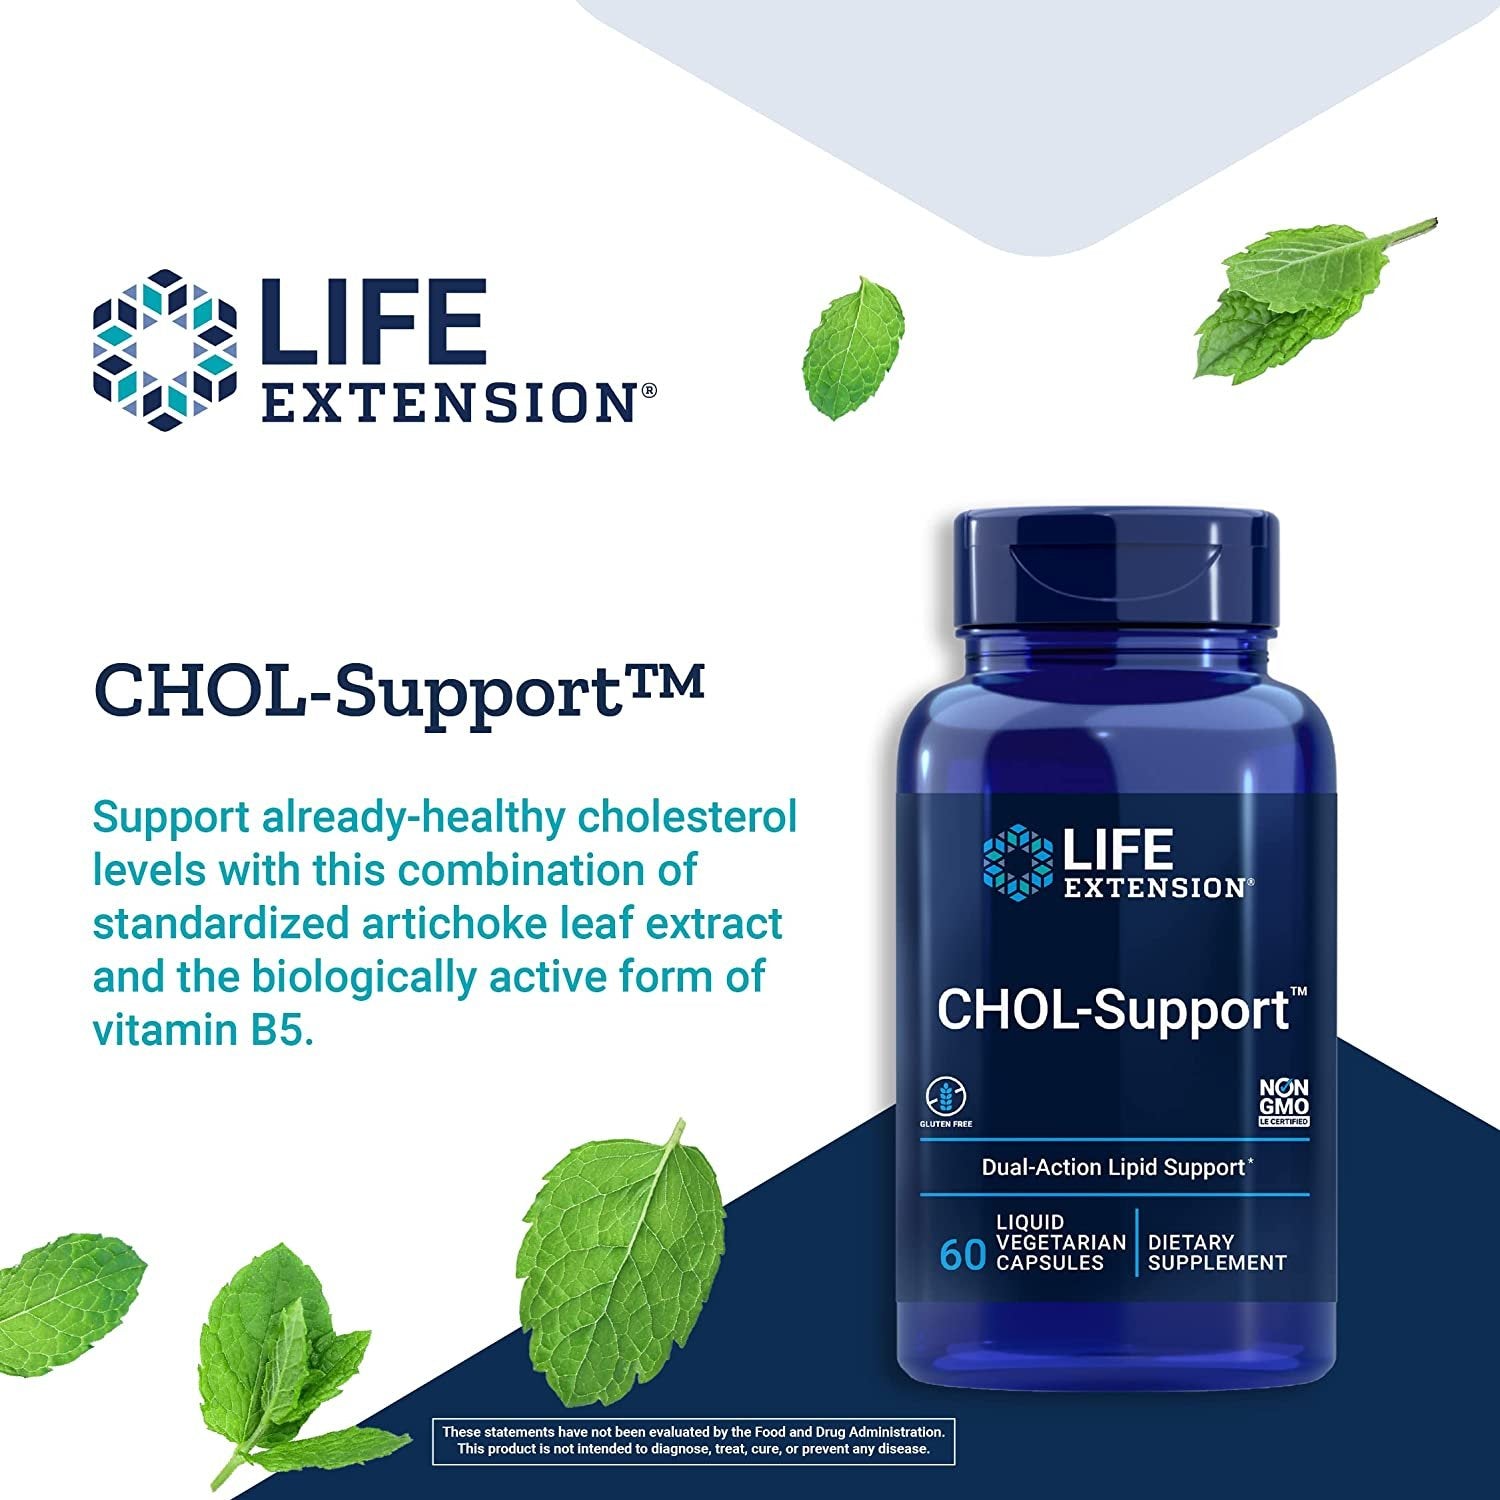 Life Extension CHOL-Support Cholesterol Management Support Supplement – Gluten-Free, Non-GMO, Vegetarian – 60 Liquid Vegetarian Capsules